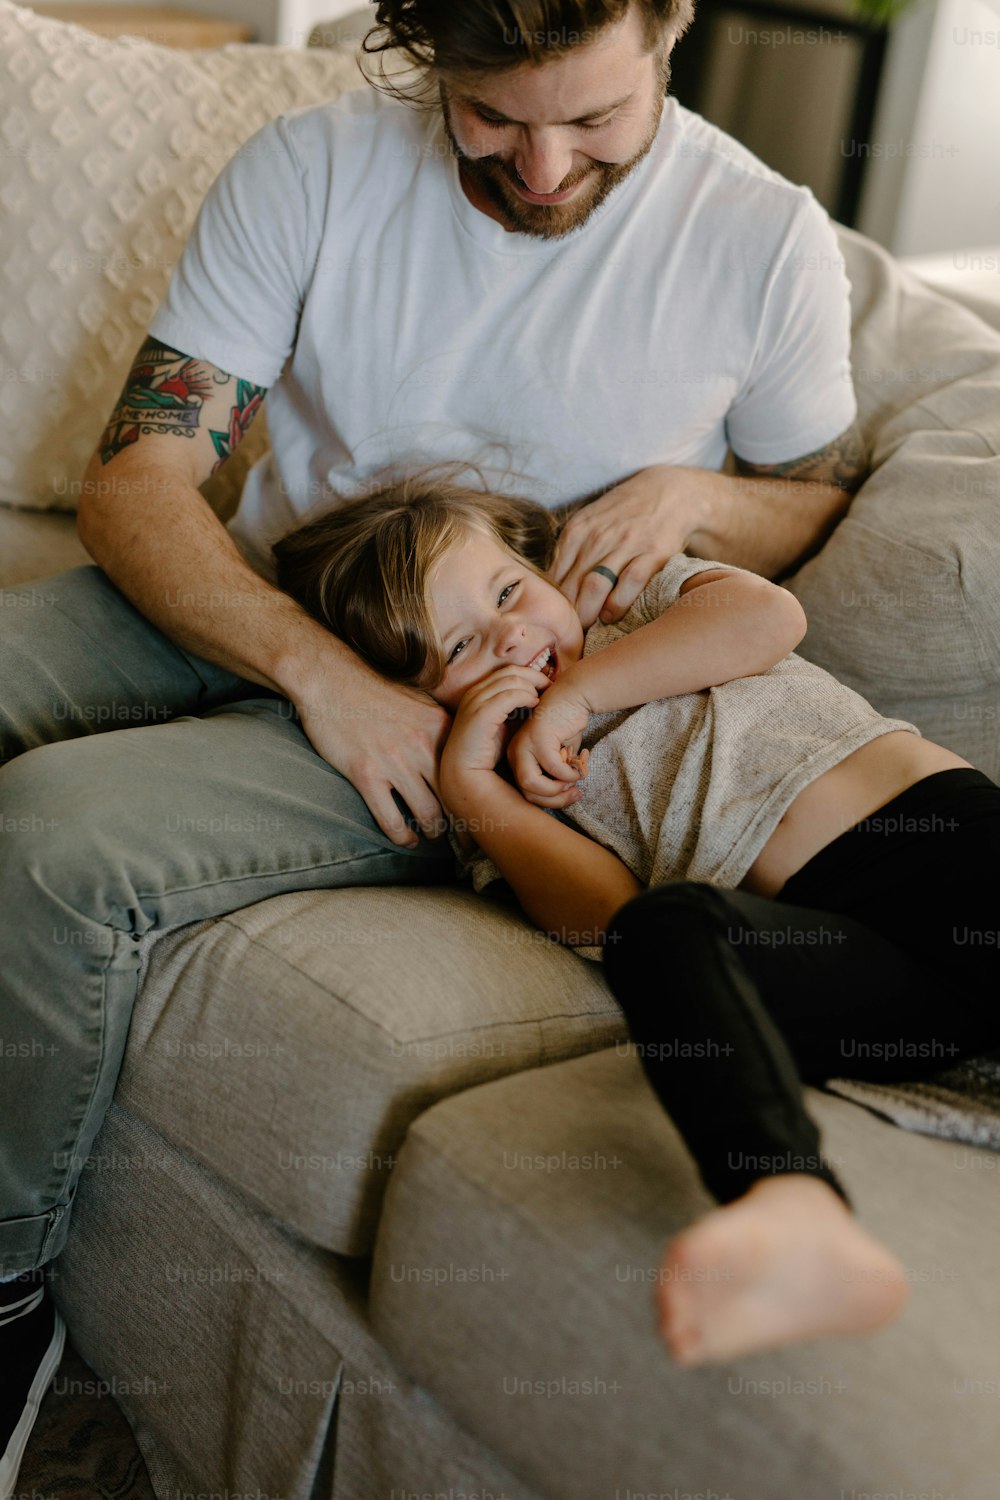 Un uomo seduto sopra un divano accanto a una bambina